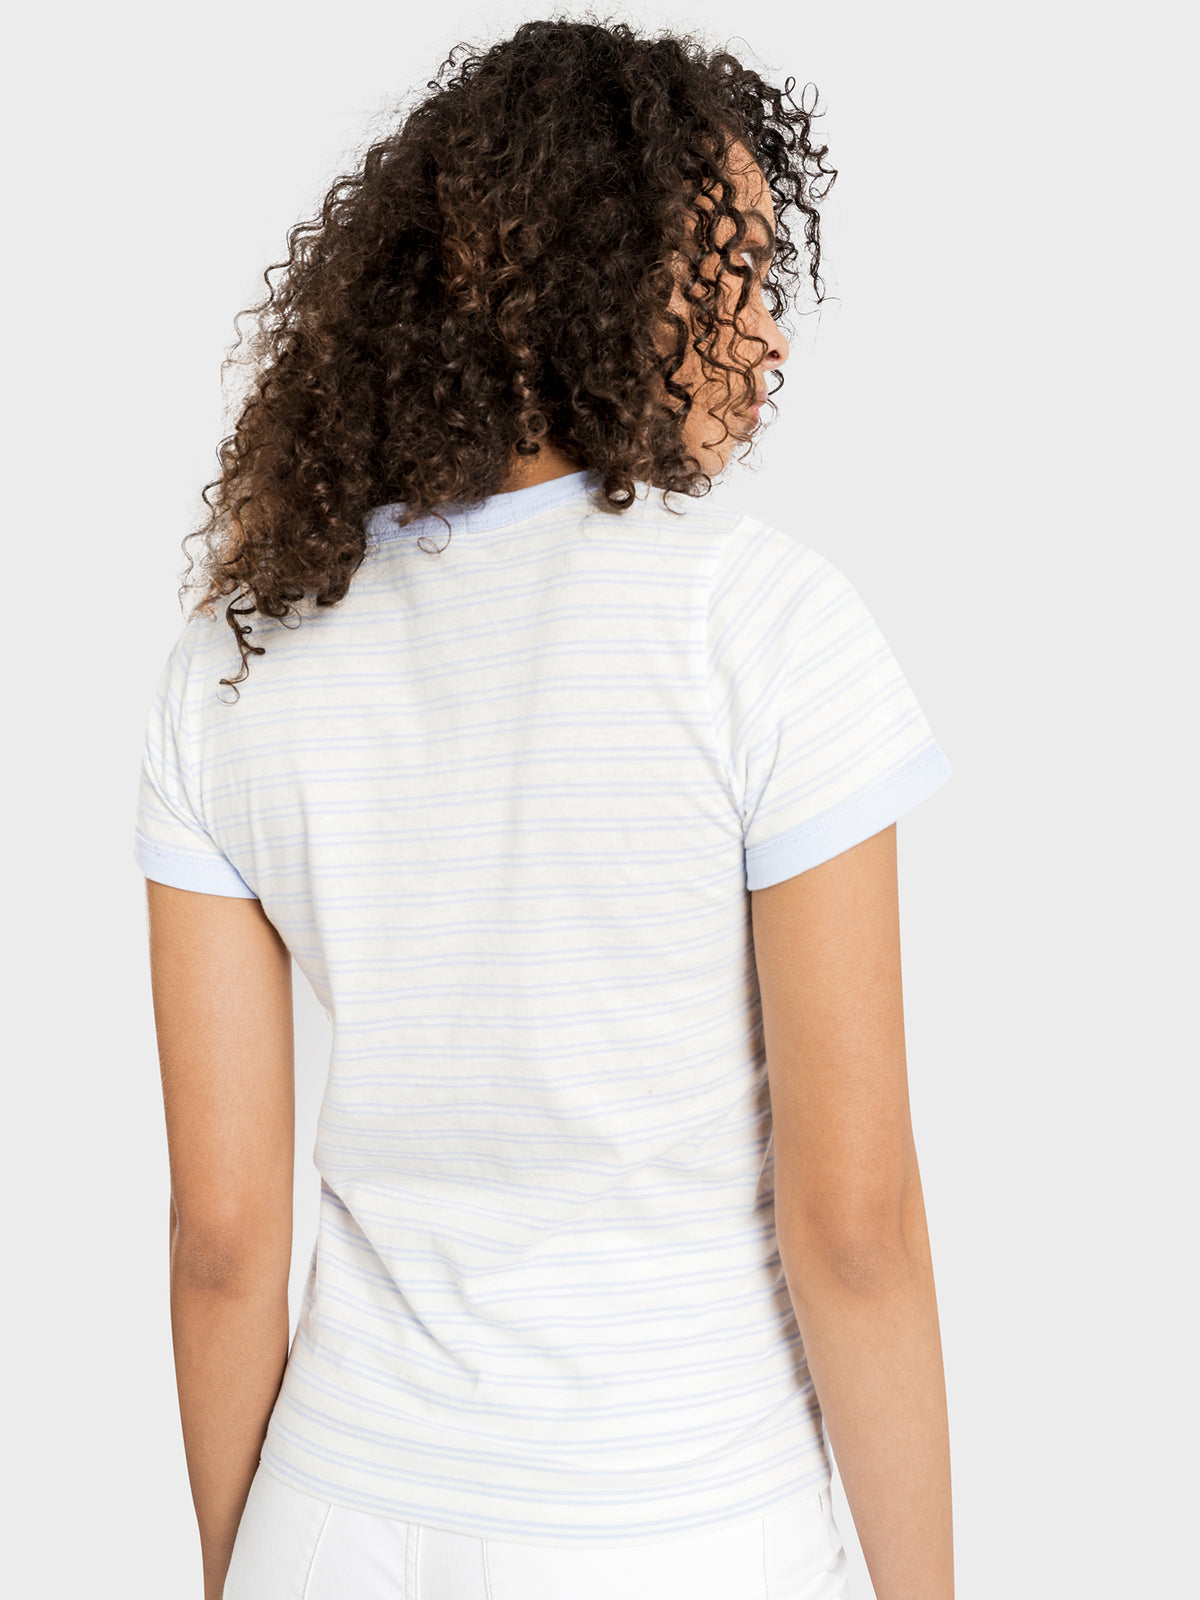 Salt Lake Ringer T-Shirt in Cloud Blue Stripe